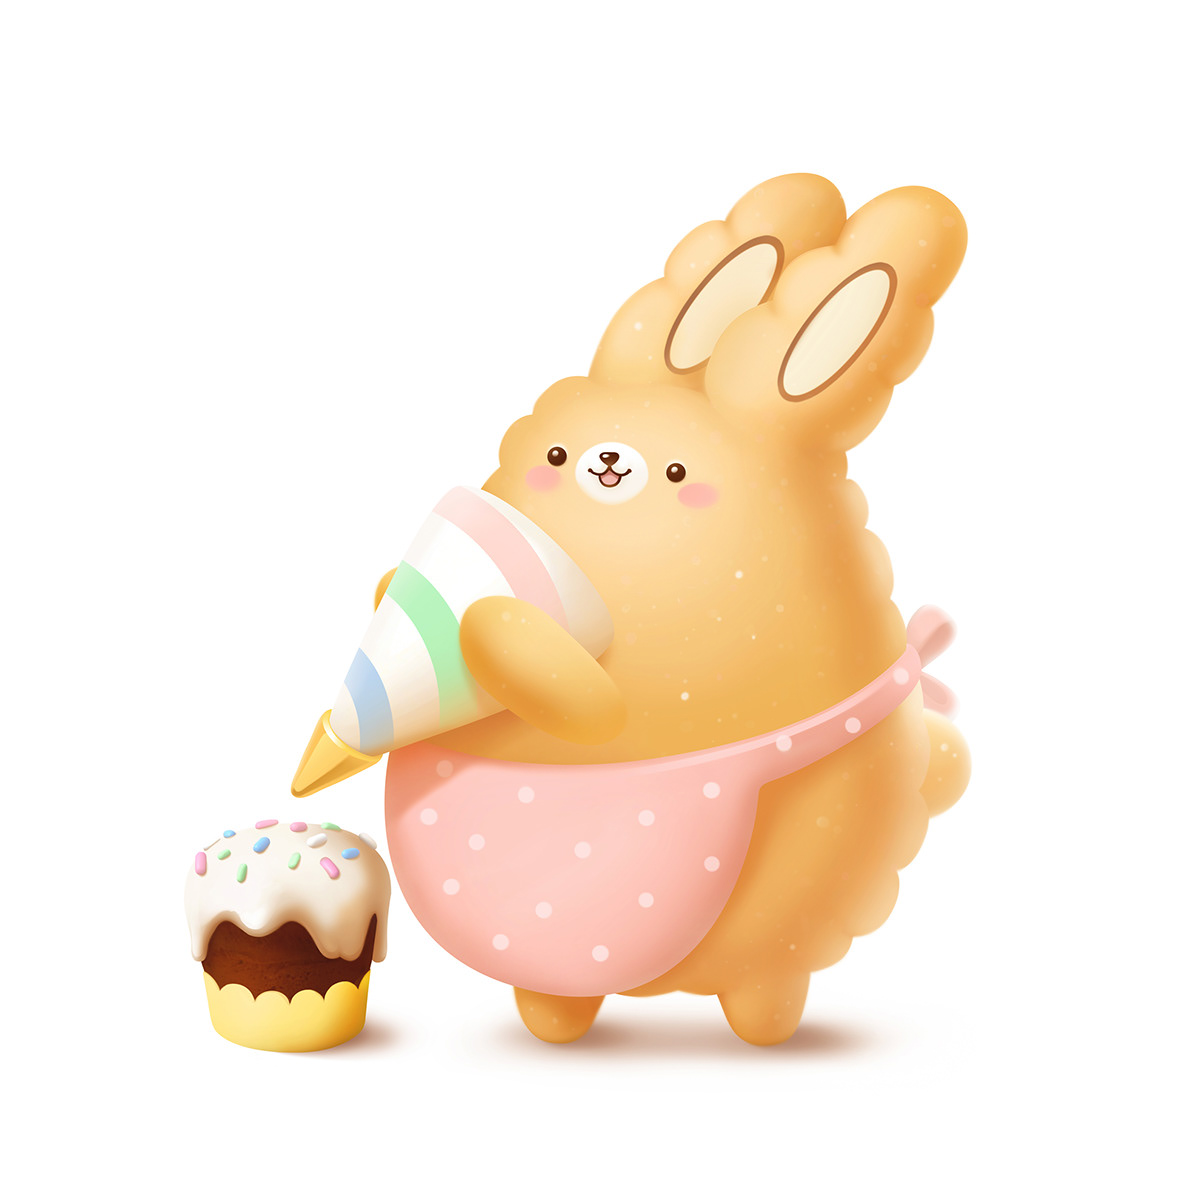 Character design  cute Digital Art  Easter easter bunny gift rabbit 2д вк vkontakte